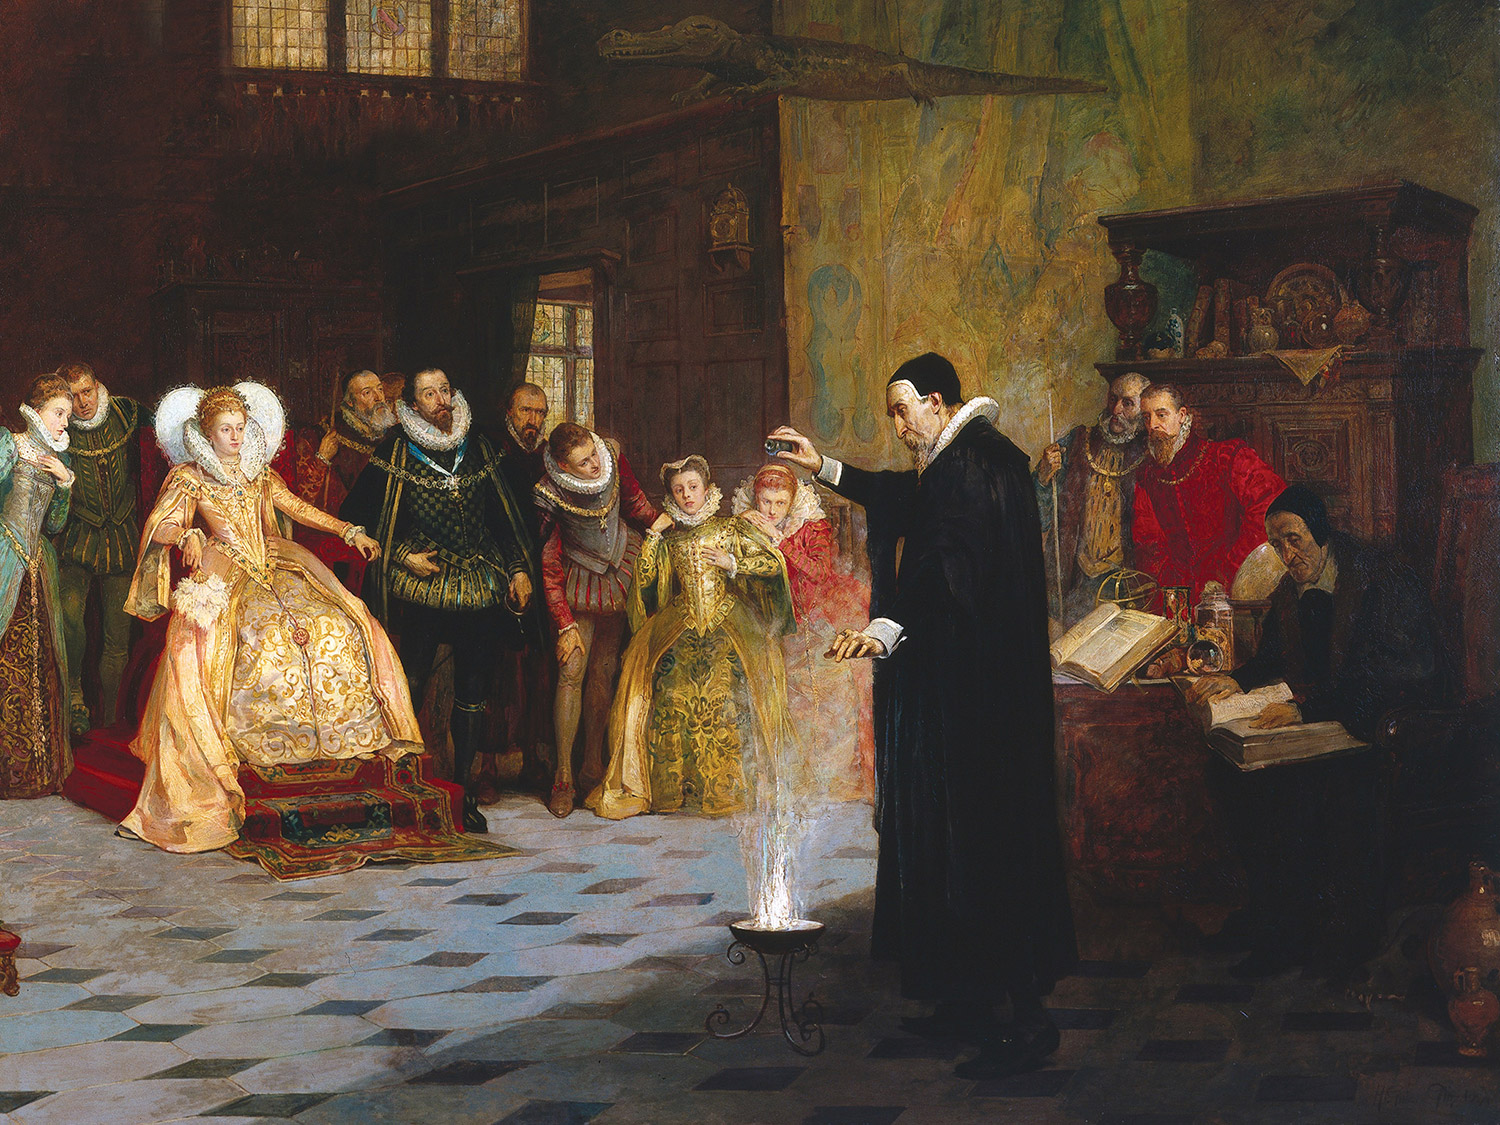 John Dee performing an experiment before Elizabeth I, by Henry Gillard Glindoni (1852-1913).